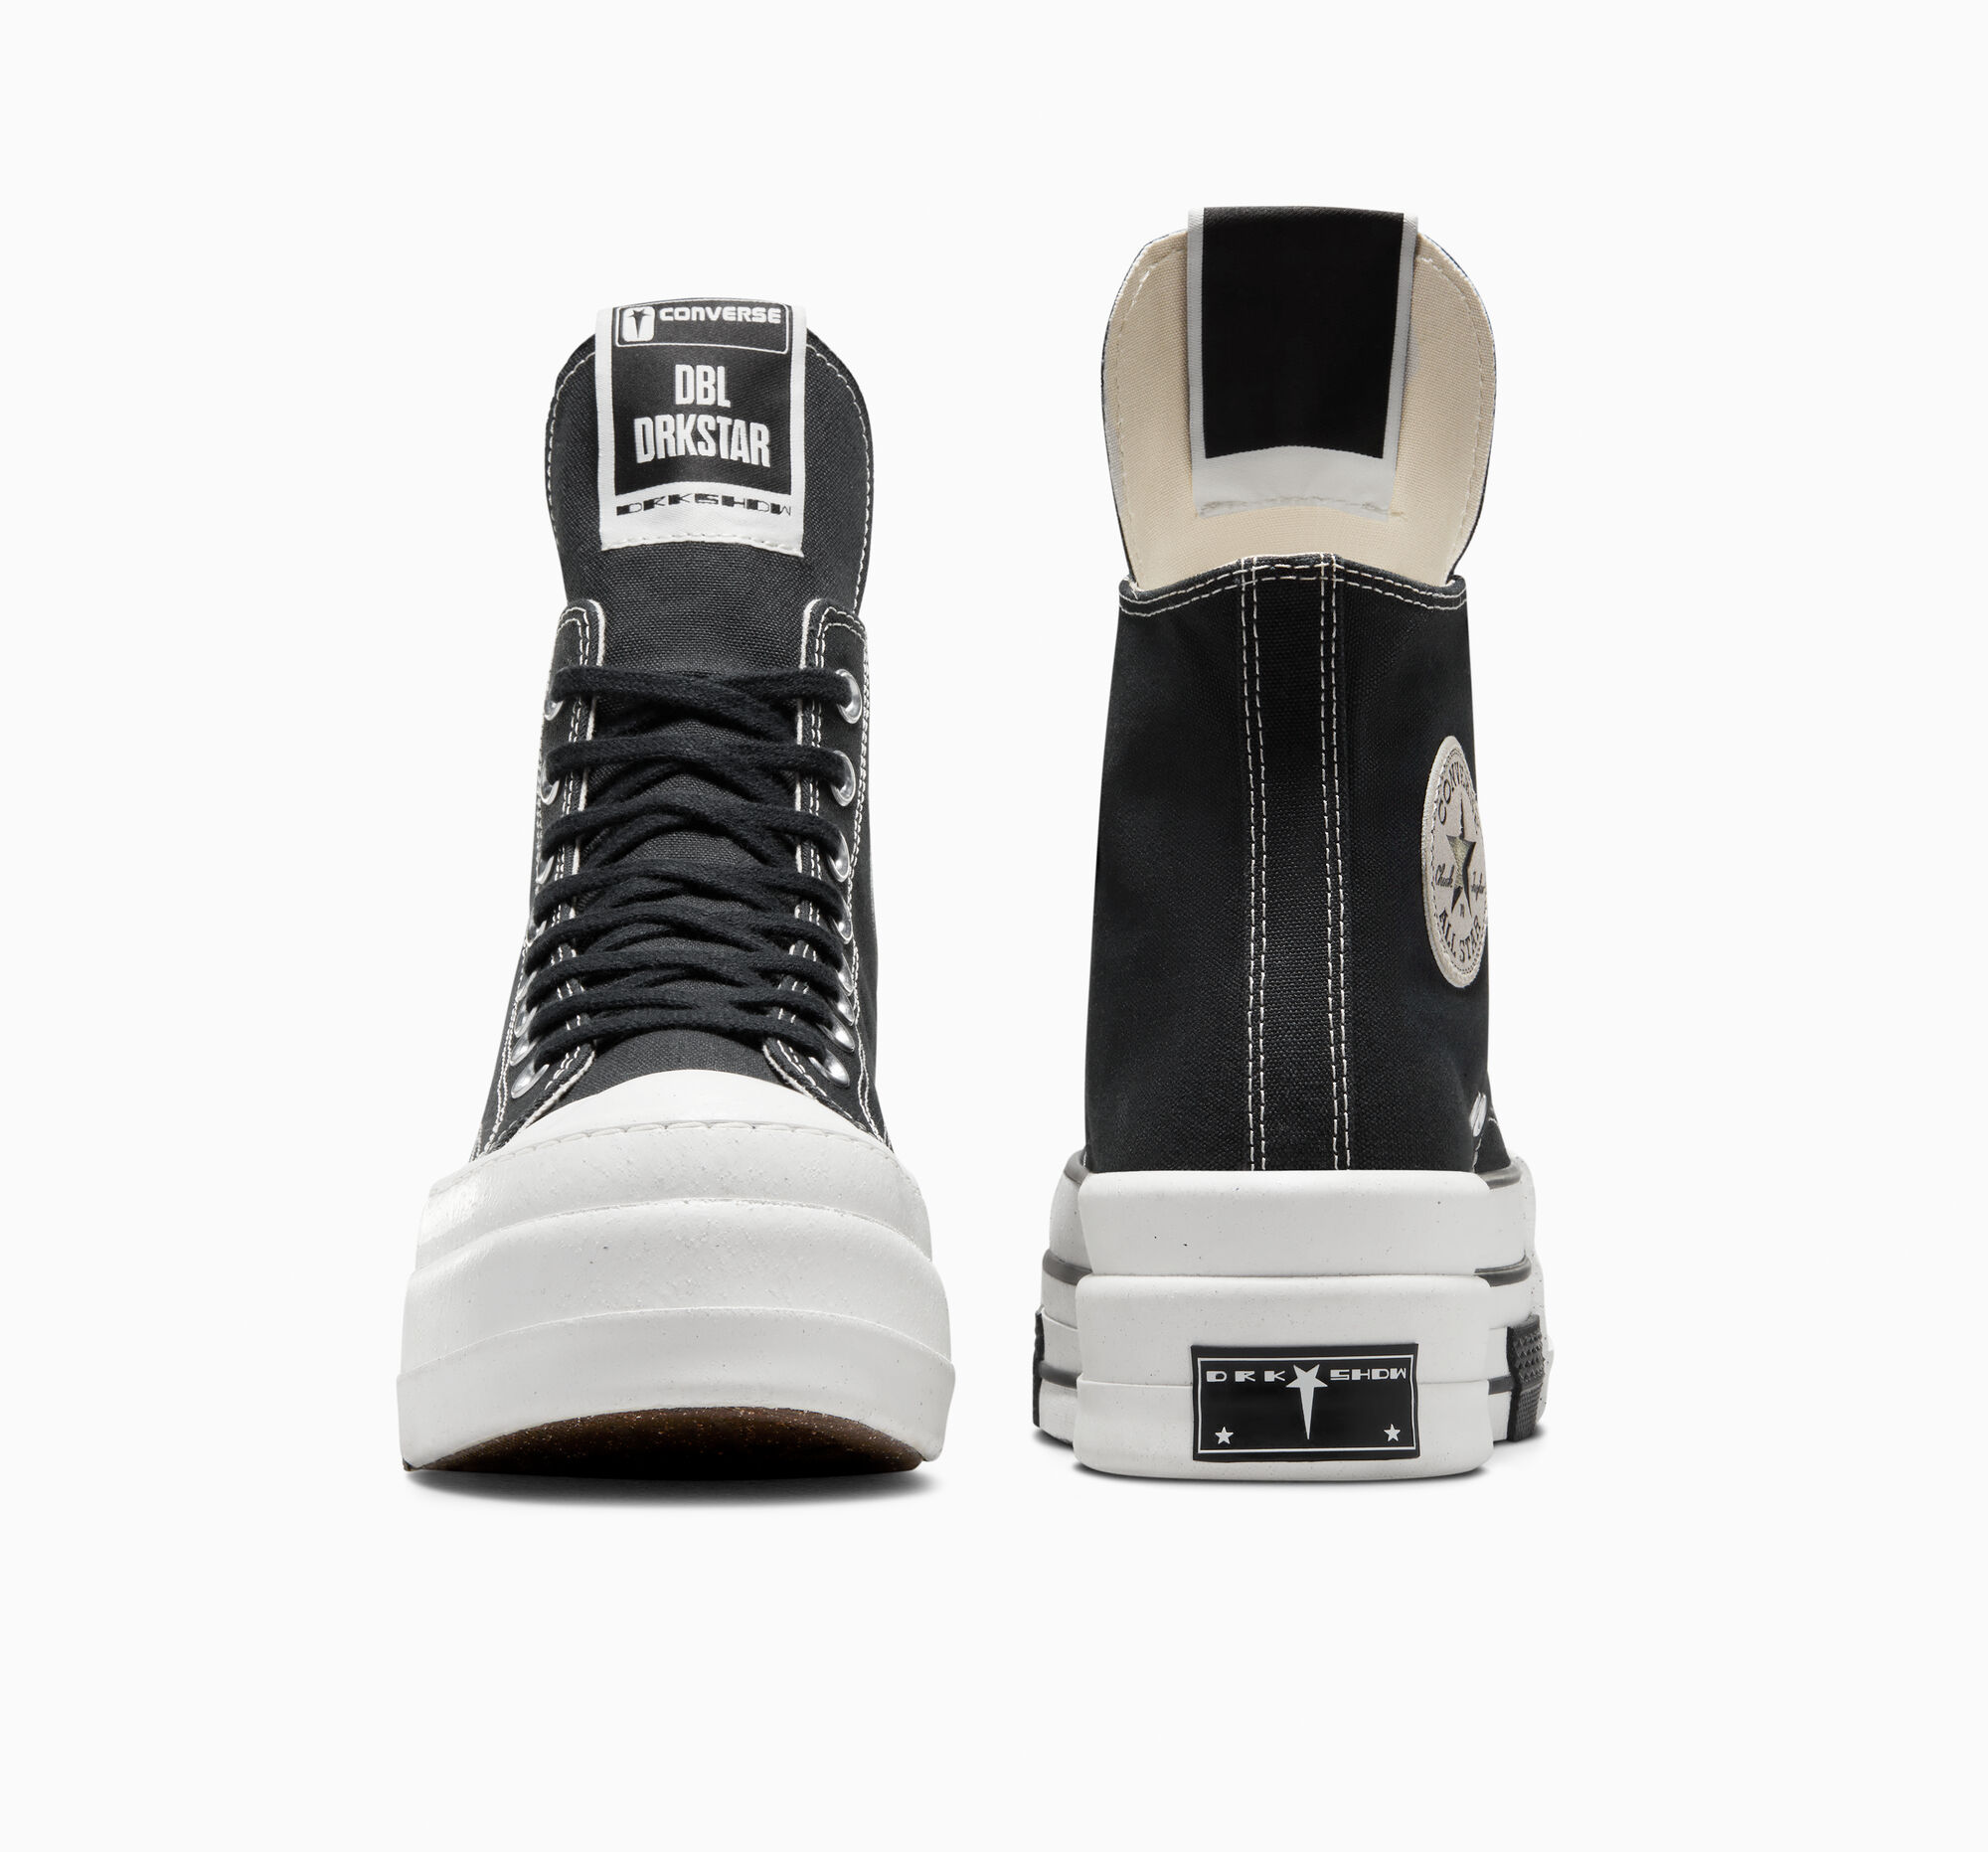 Black dbl drkstar high-top sneakers - unisex - CONVERSE X DRKSHDW